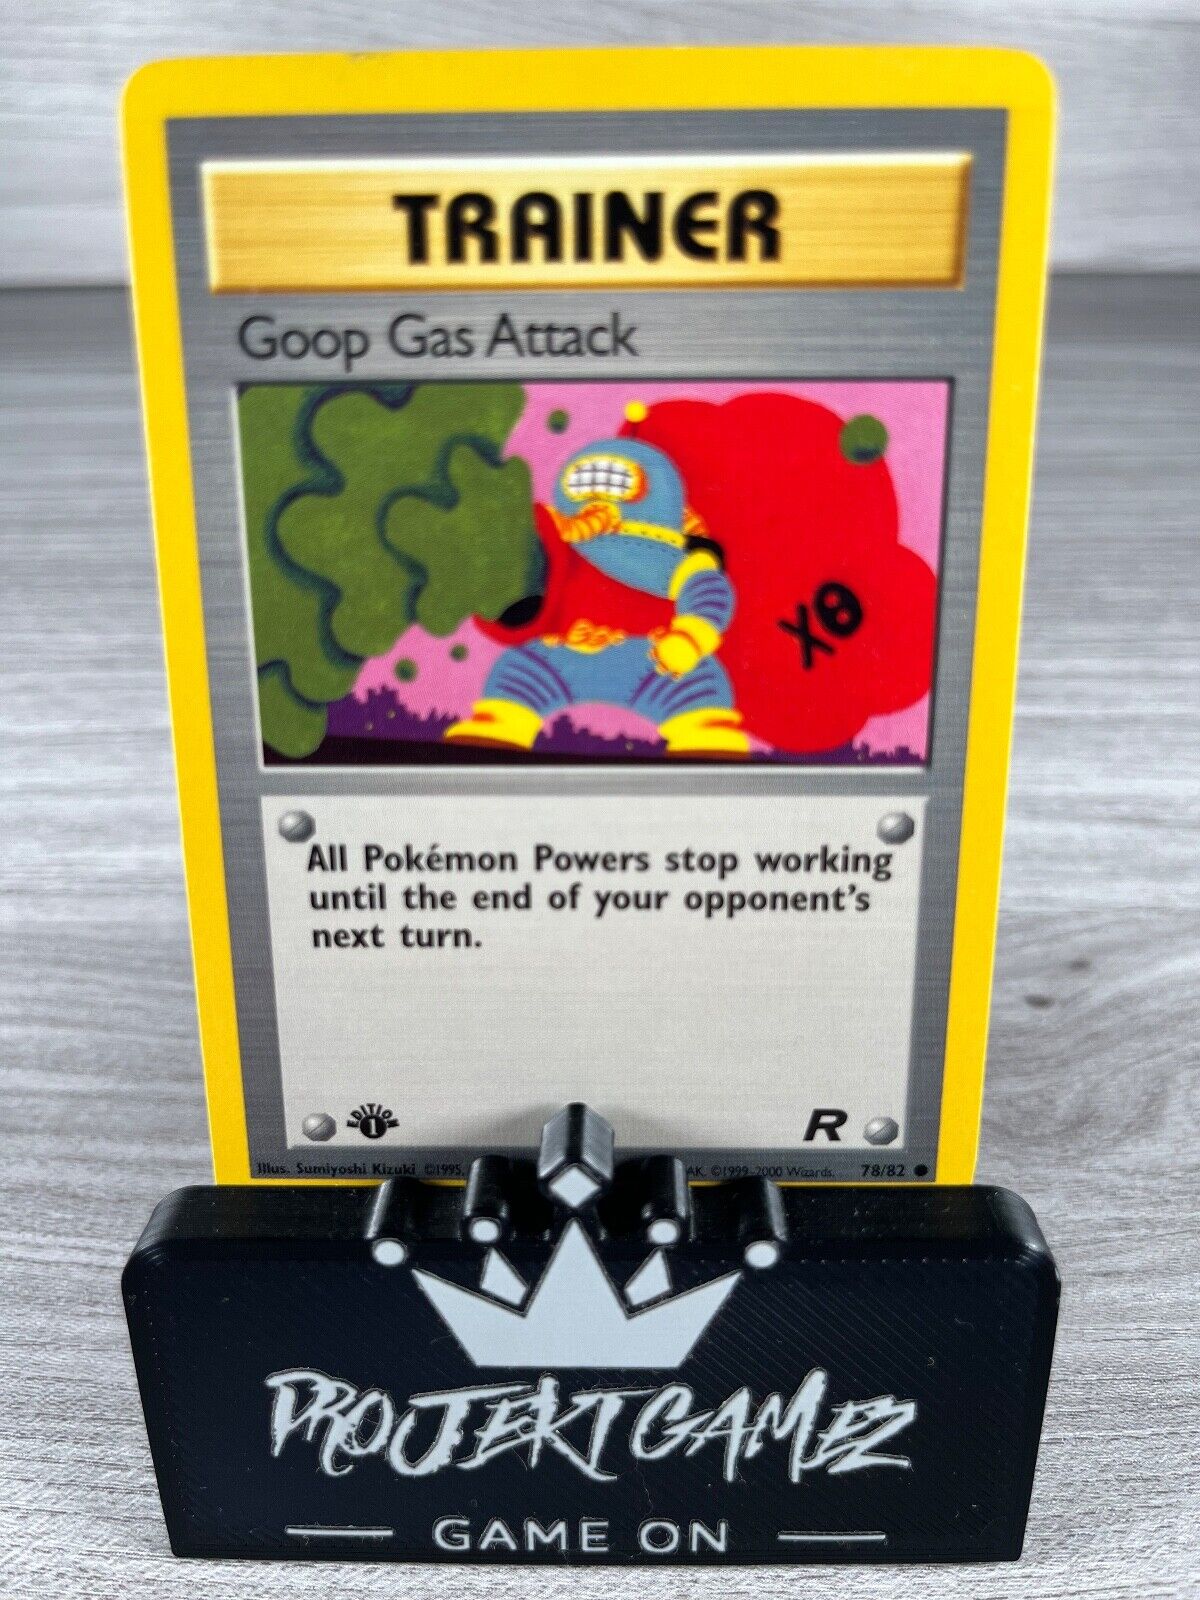 Goop Gas Attack 1st Edition Team Rocket 78/82 WOTC Vintage Pokemon Card